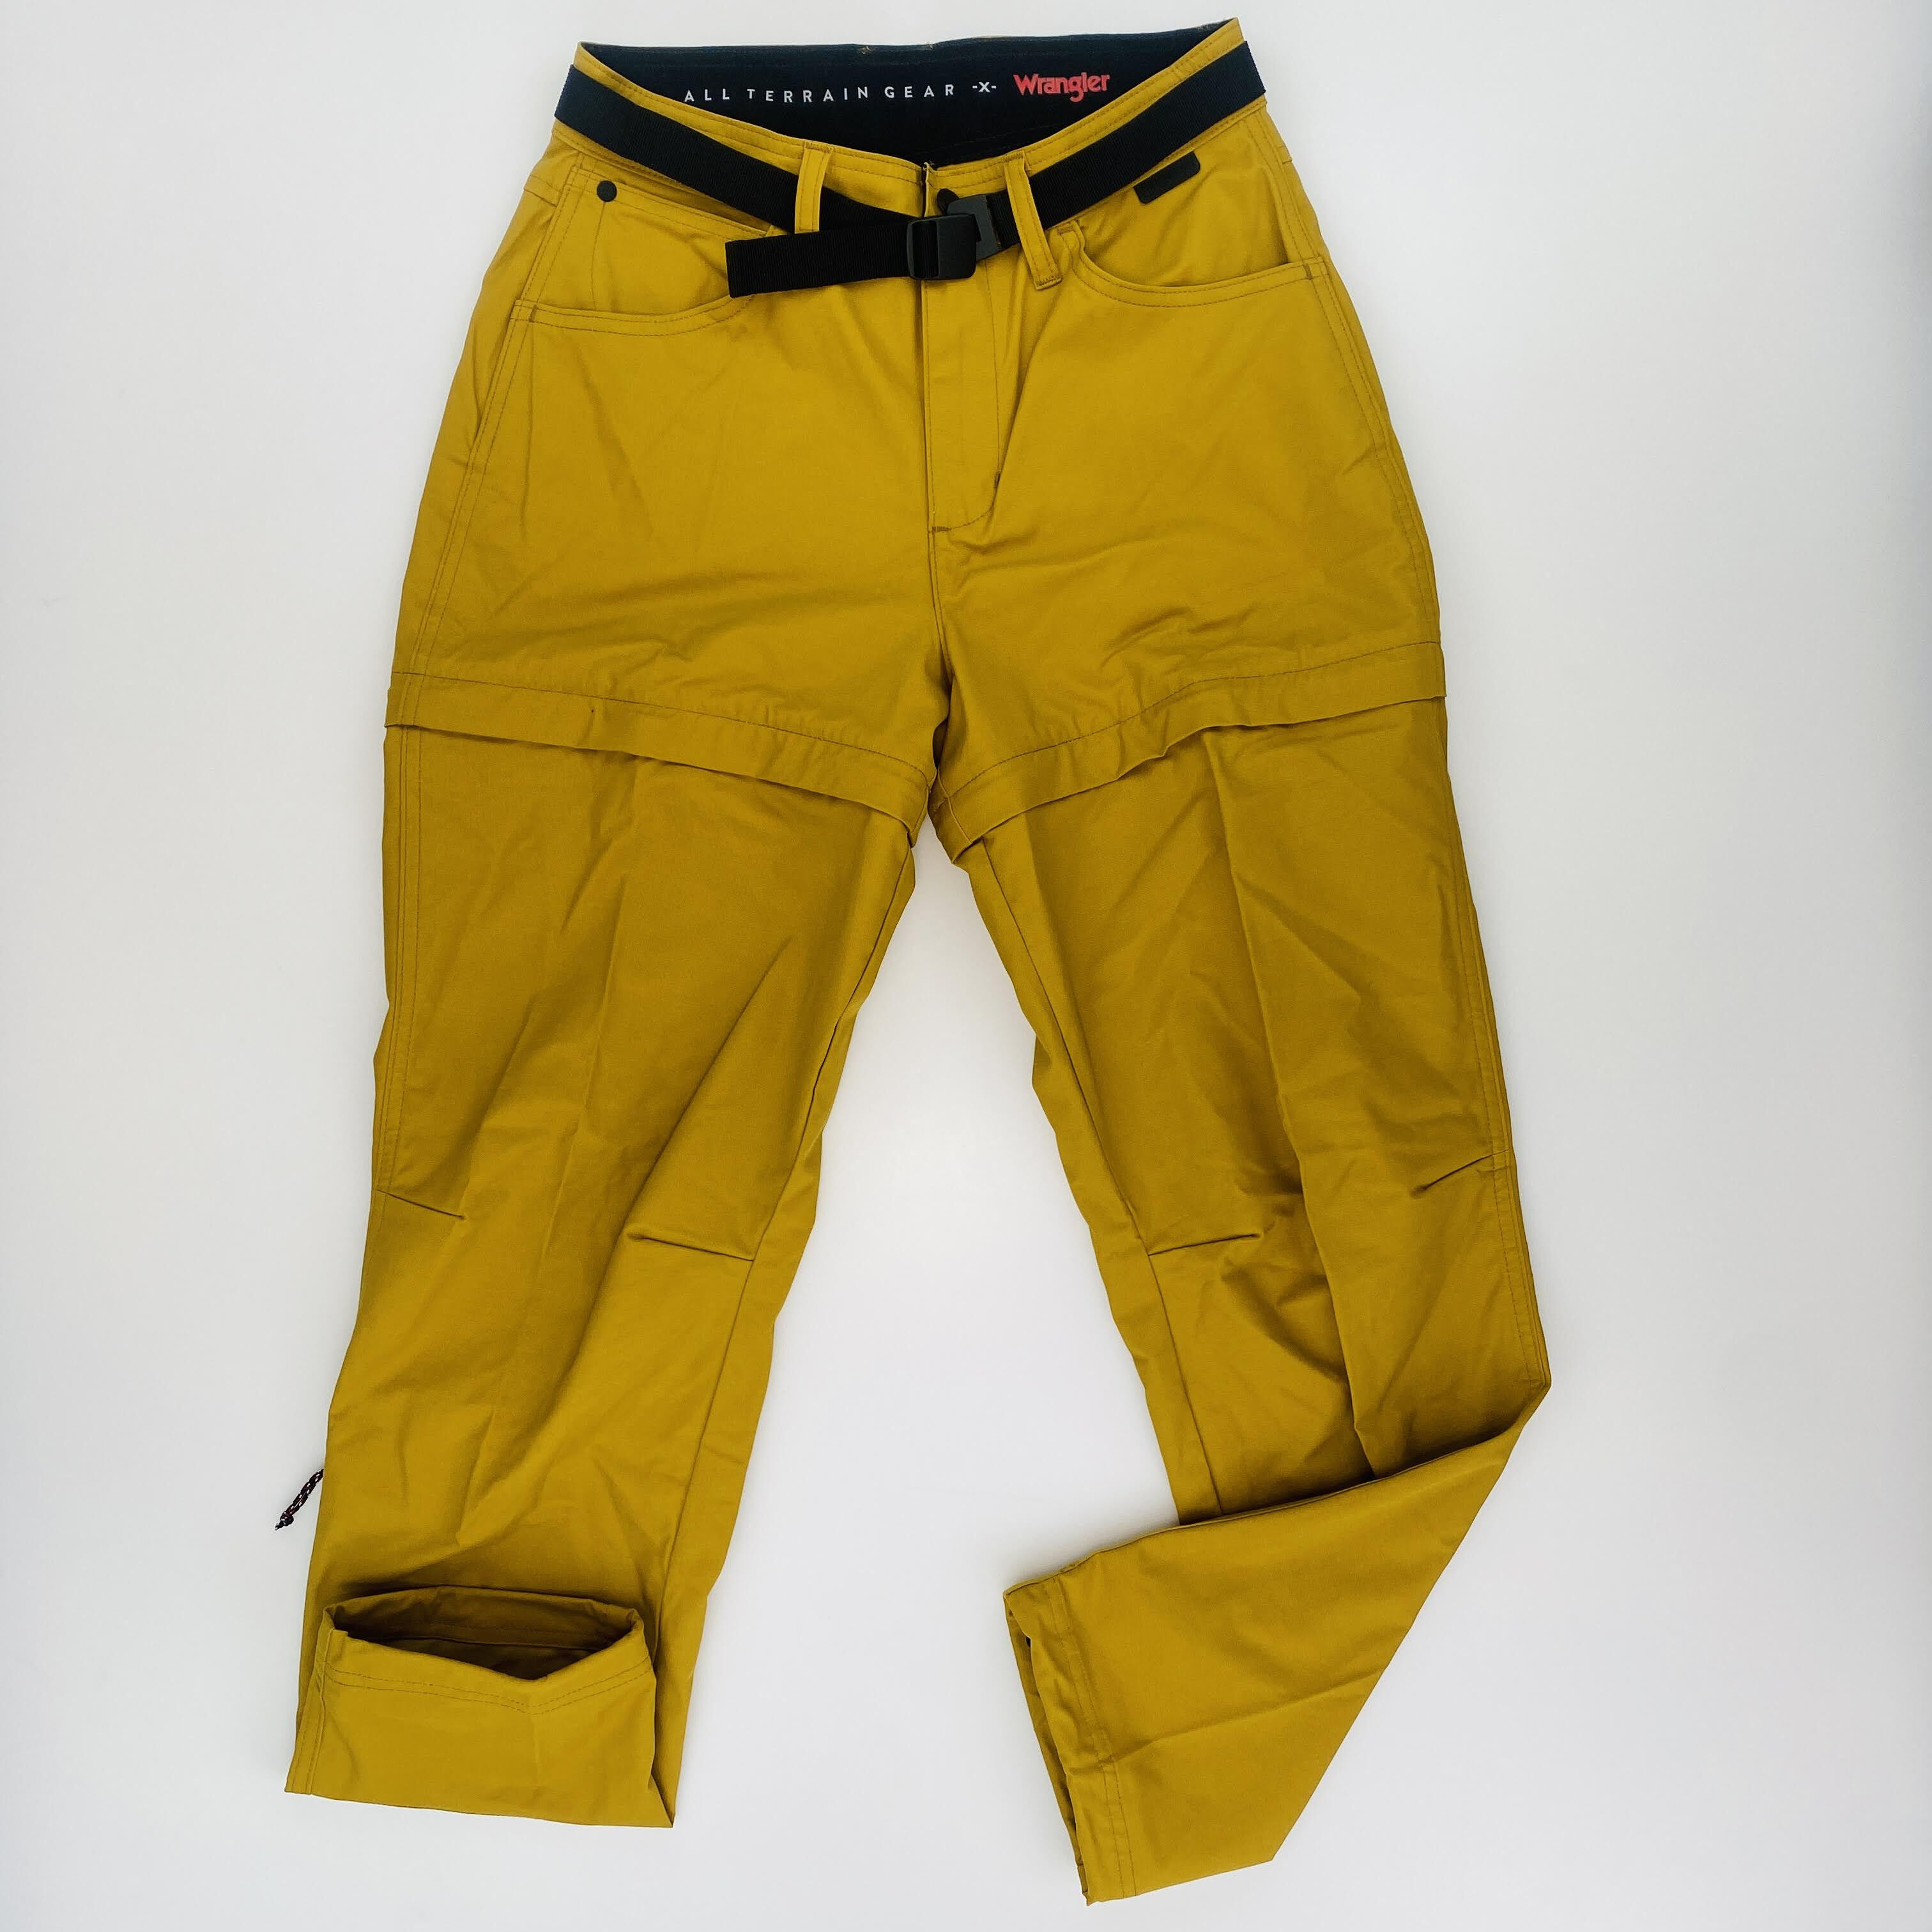 Wrangler Packable Zipoff Pant - Second Hand Walking trousers - Women's - Yellow - US 28 | Hardloop